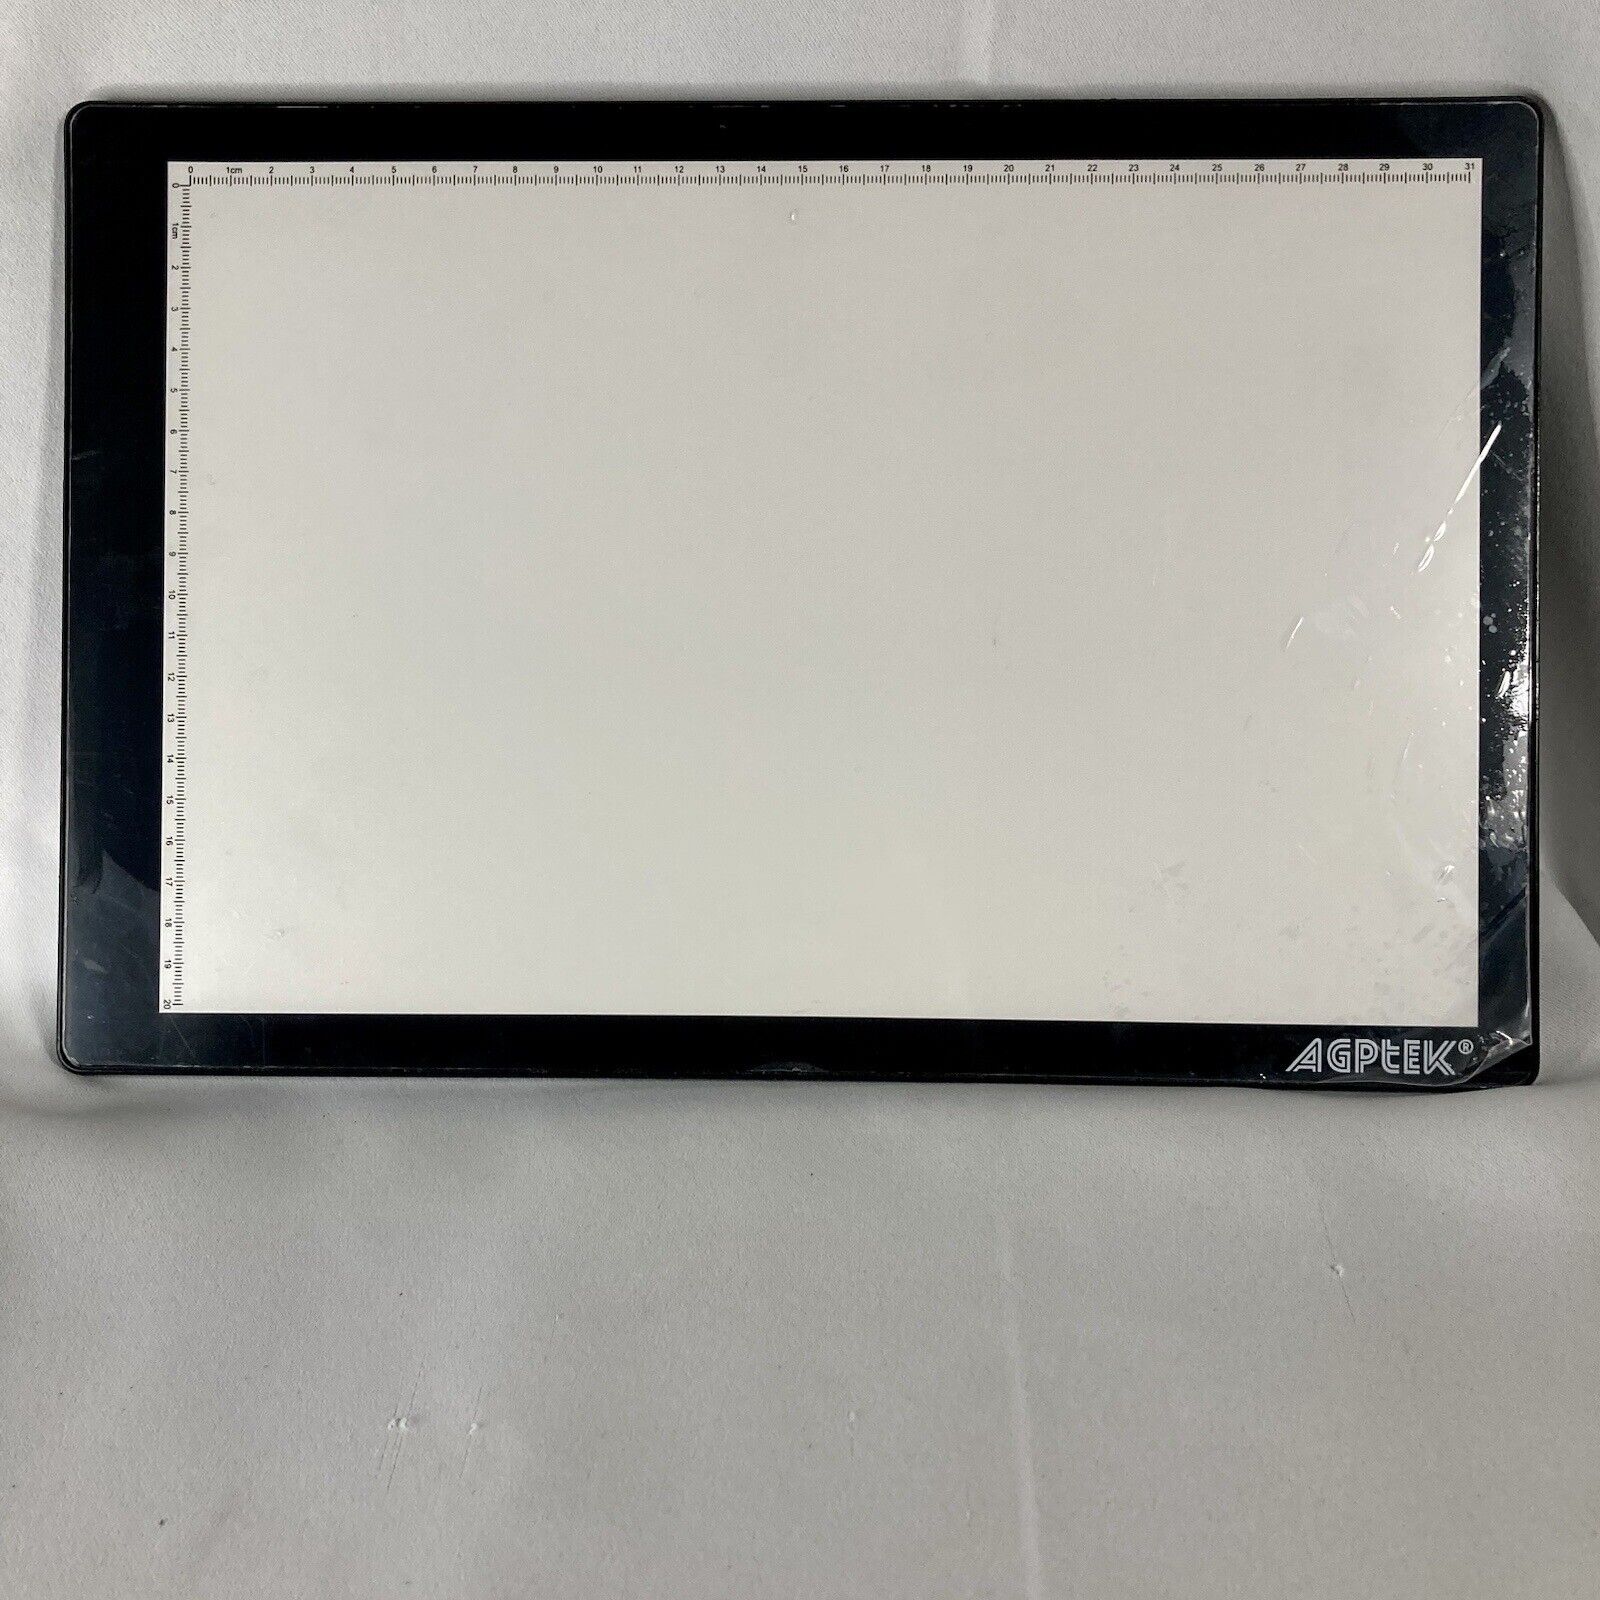 AGPtek New A4-DZ LED Drawing Tracing Light Pad